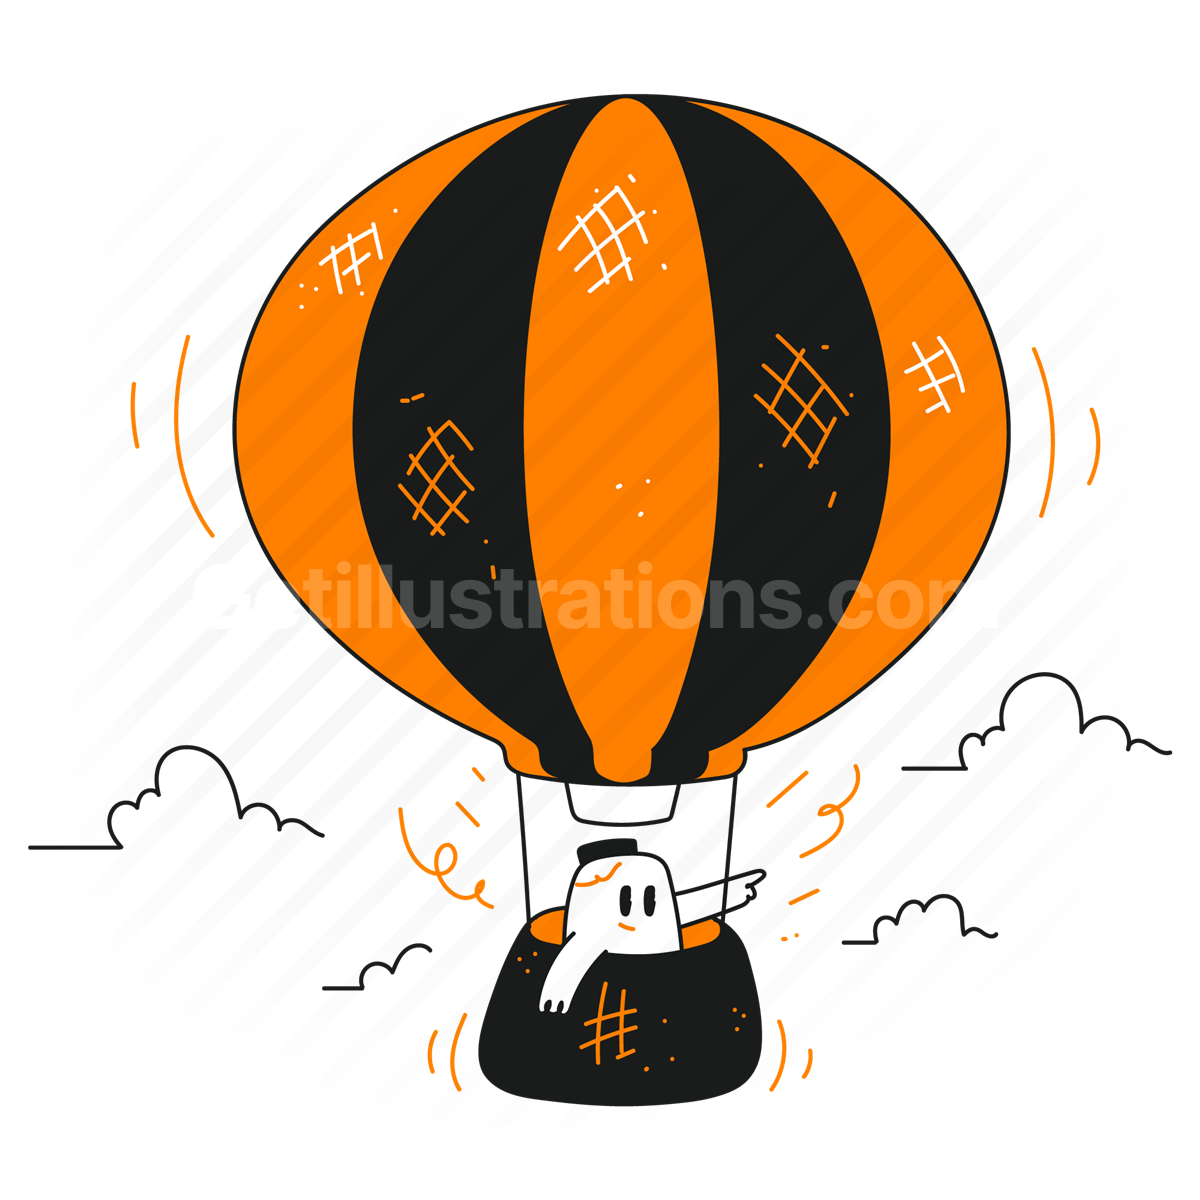 hot air balloon, travelling, transport, direction, navigation, destination